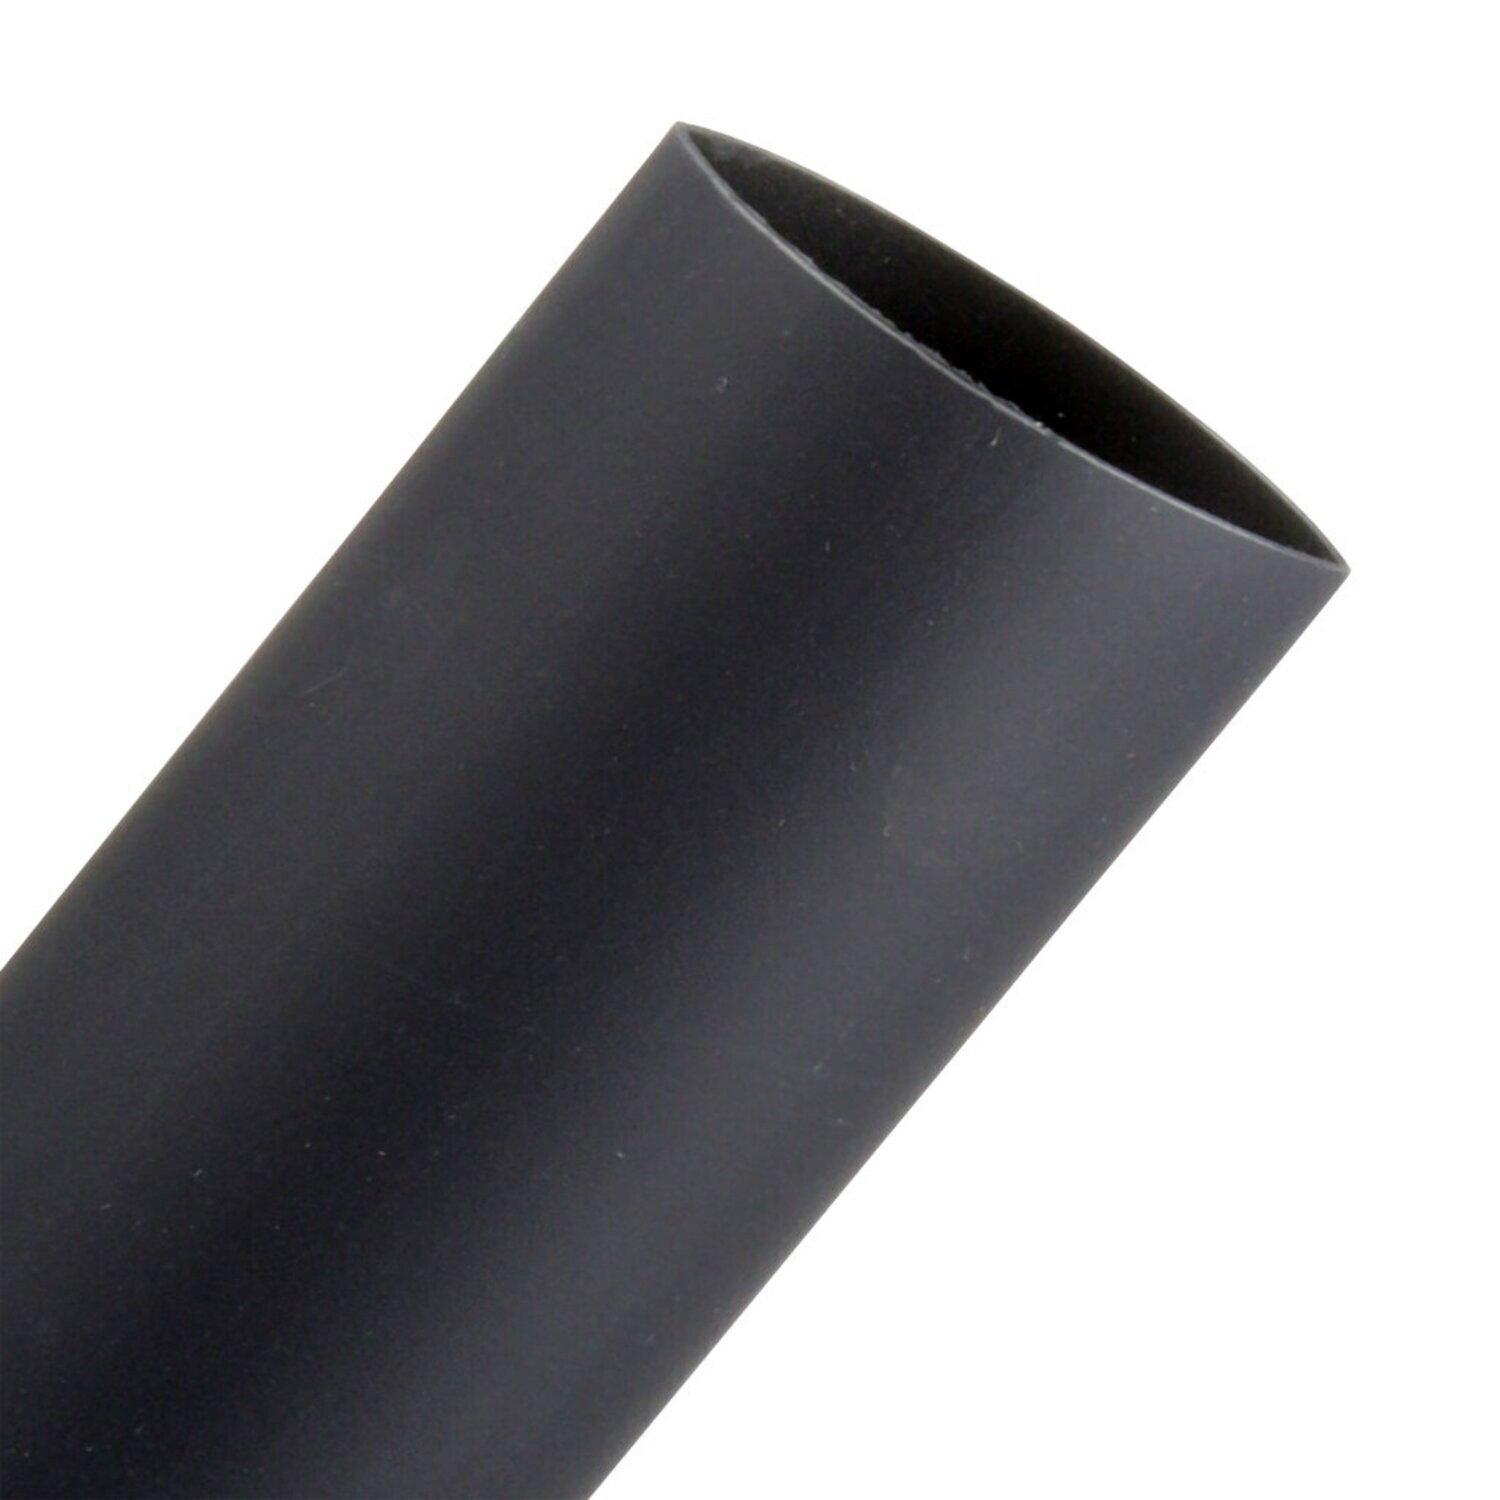 7100026209 - 3M Heat Shrink Thin-Wall Tubing FP-301-1-Black-100`: 100 ft spool
length, 300 ft/box, 3 Rolls/Case